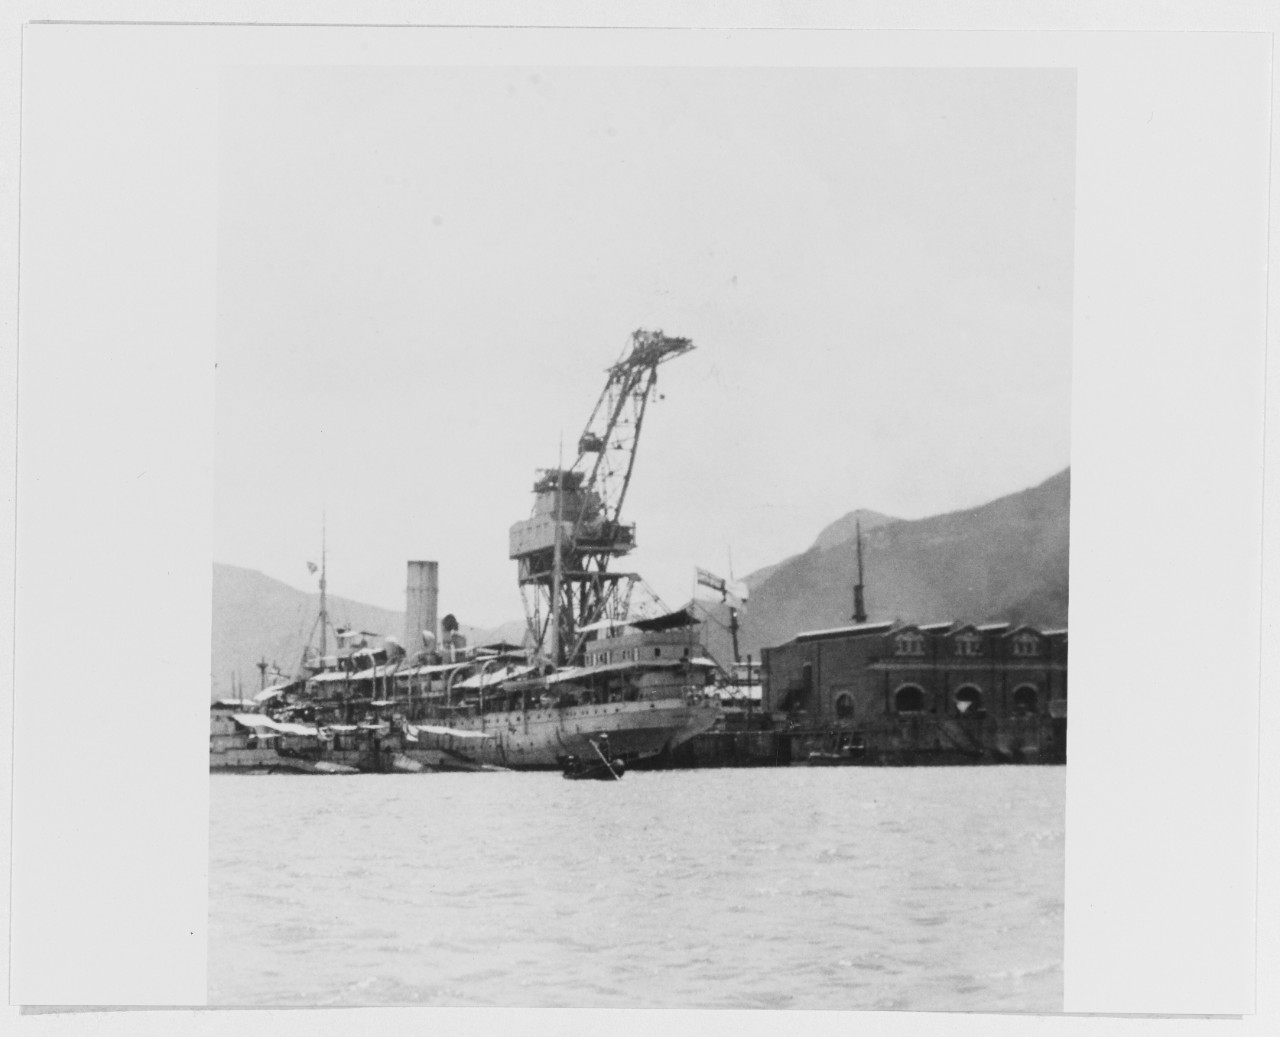 AMBROSE (British submarine depot ship, 1915)